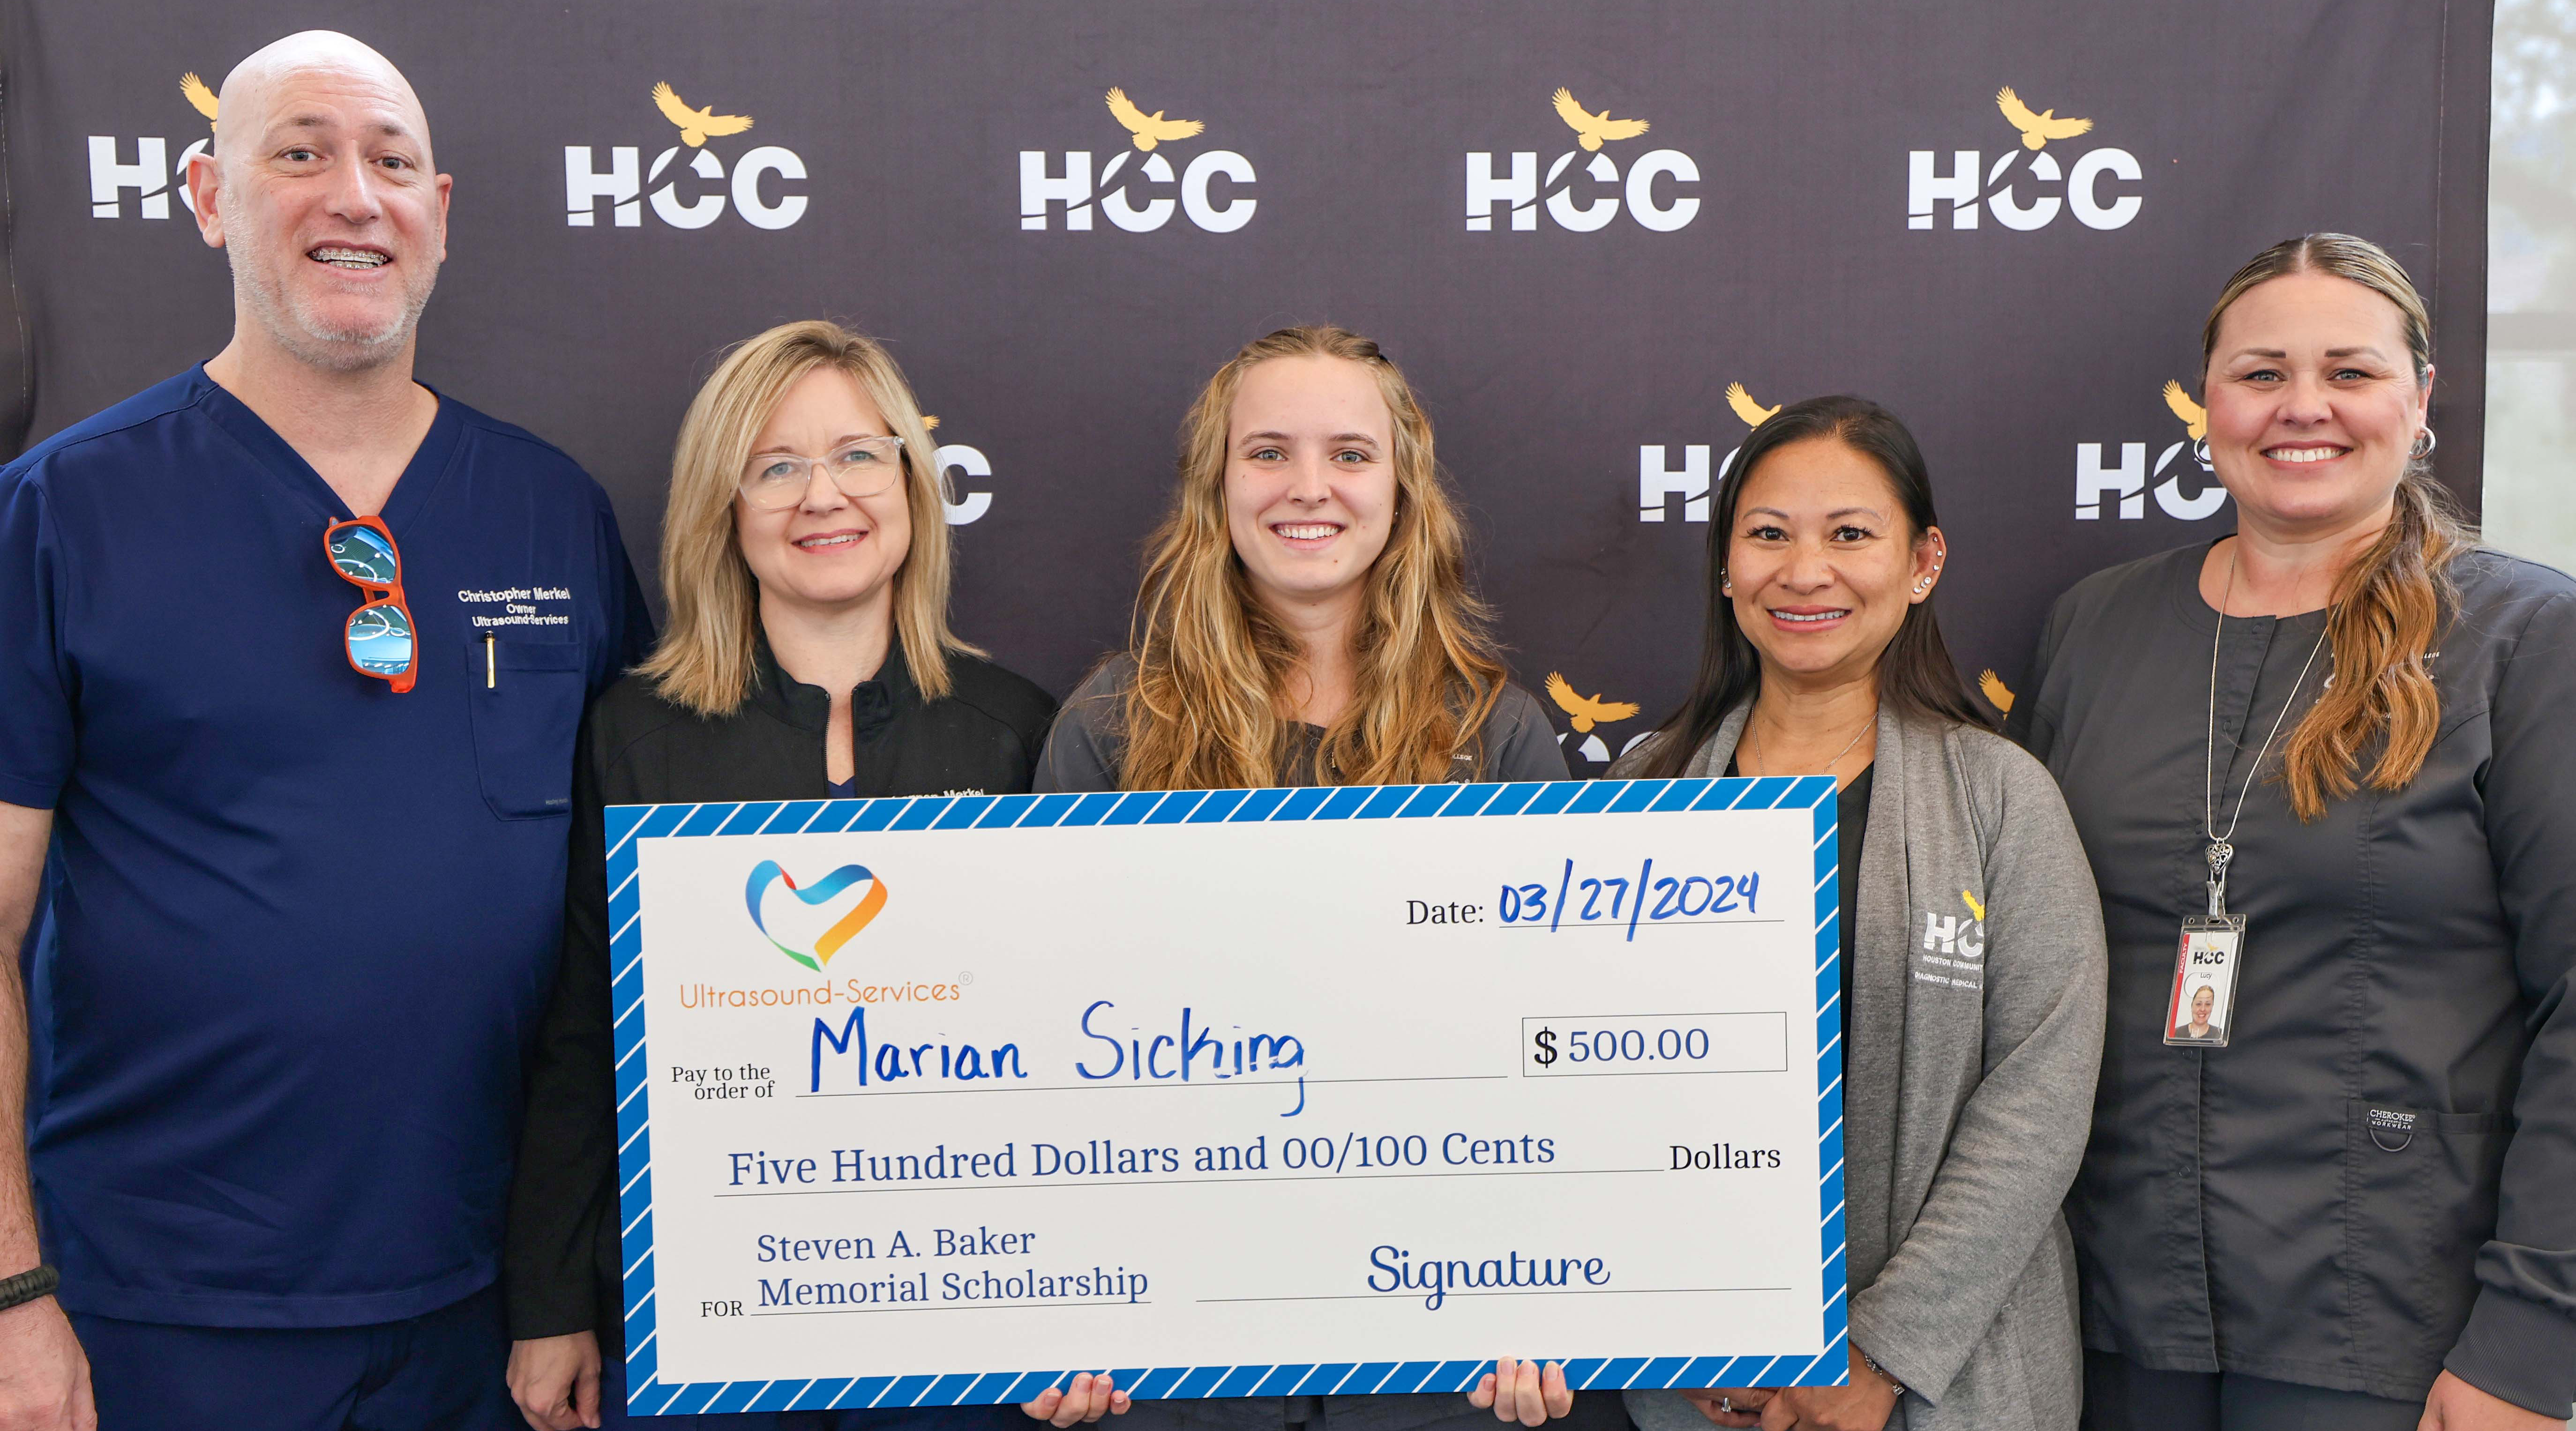 HCC sonography student receives $500 memorial scholarship
